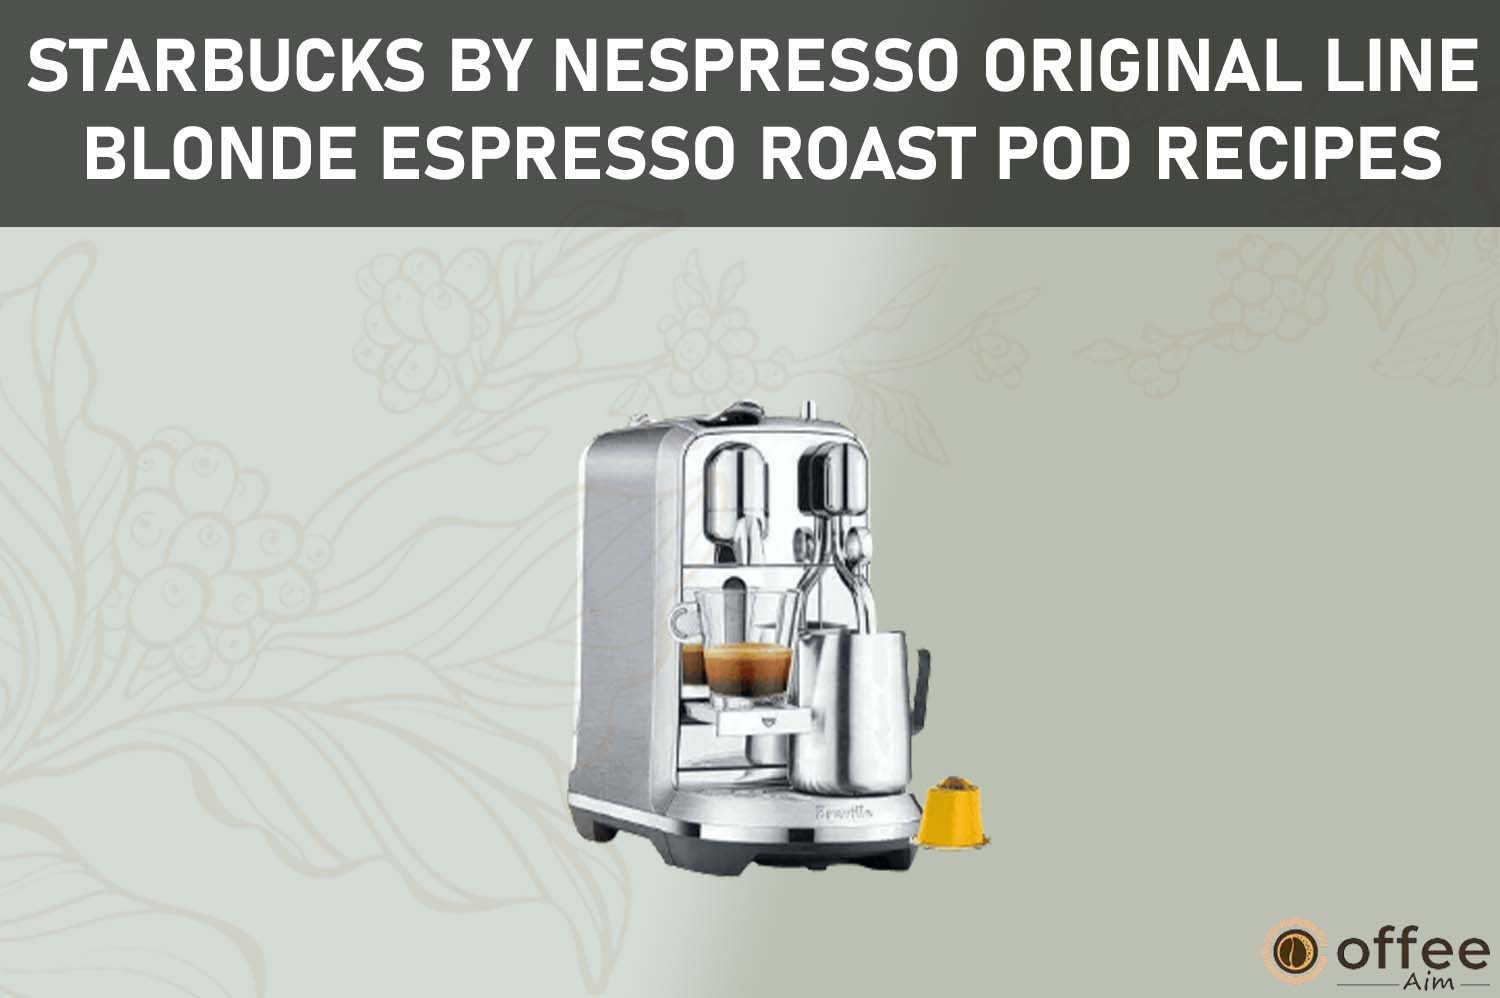 Featured image for the article "Starbucks by Nespresso Original Line Blonde Espresso Roast Pod Recipes"